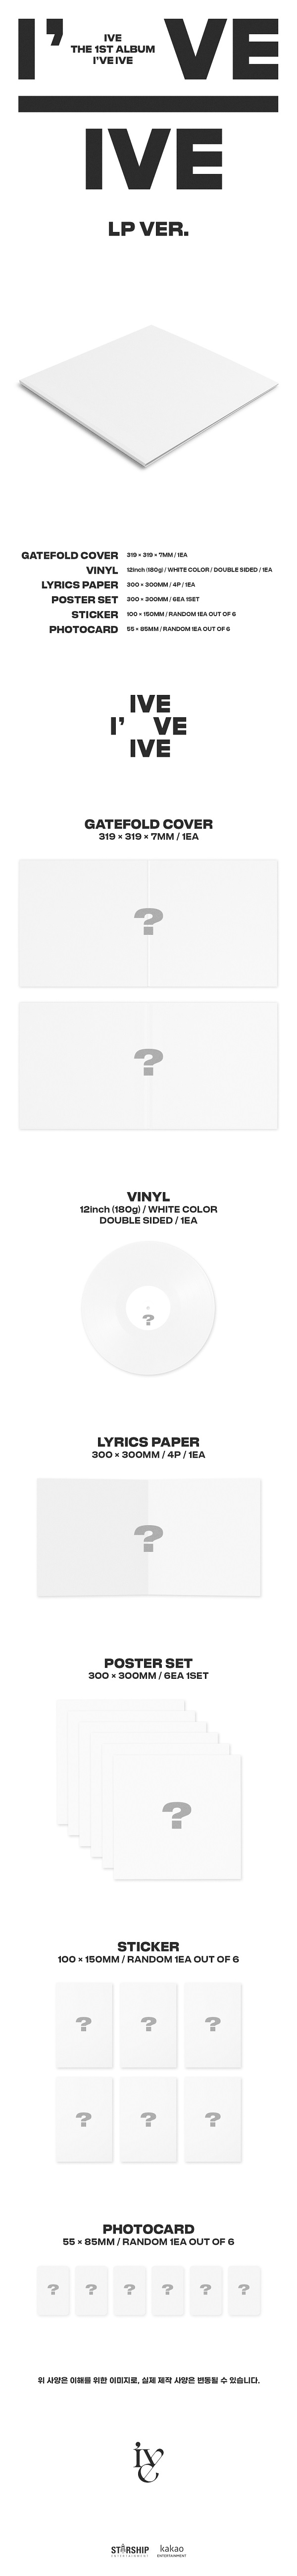 I've IVE VINYL LP ver. レコード盤 トレカ ウォニョン